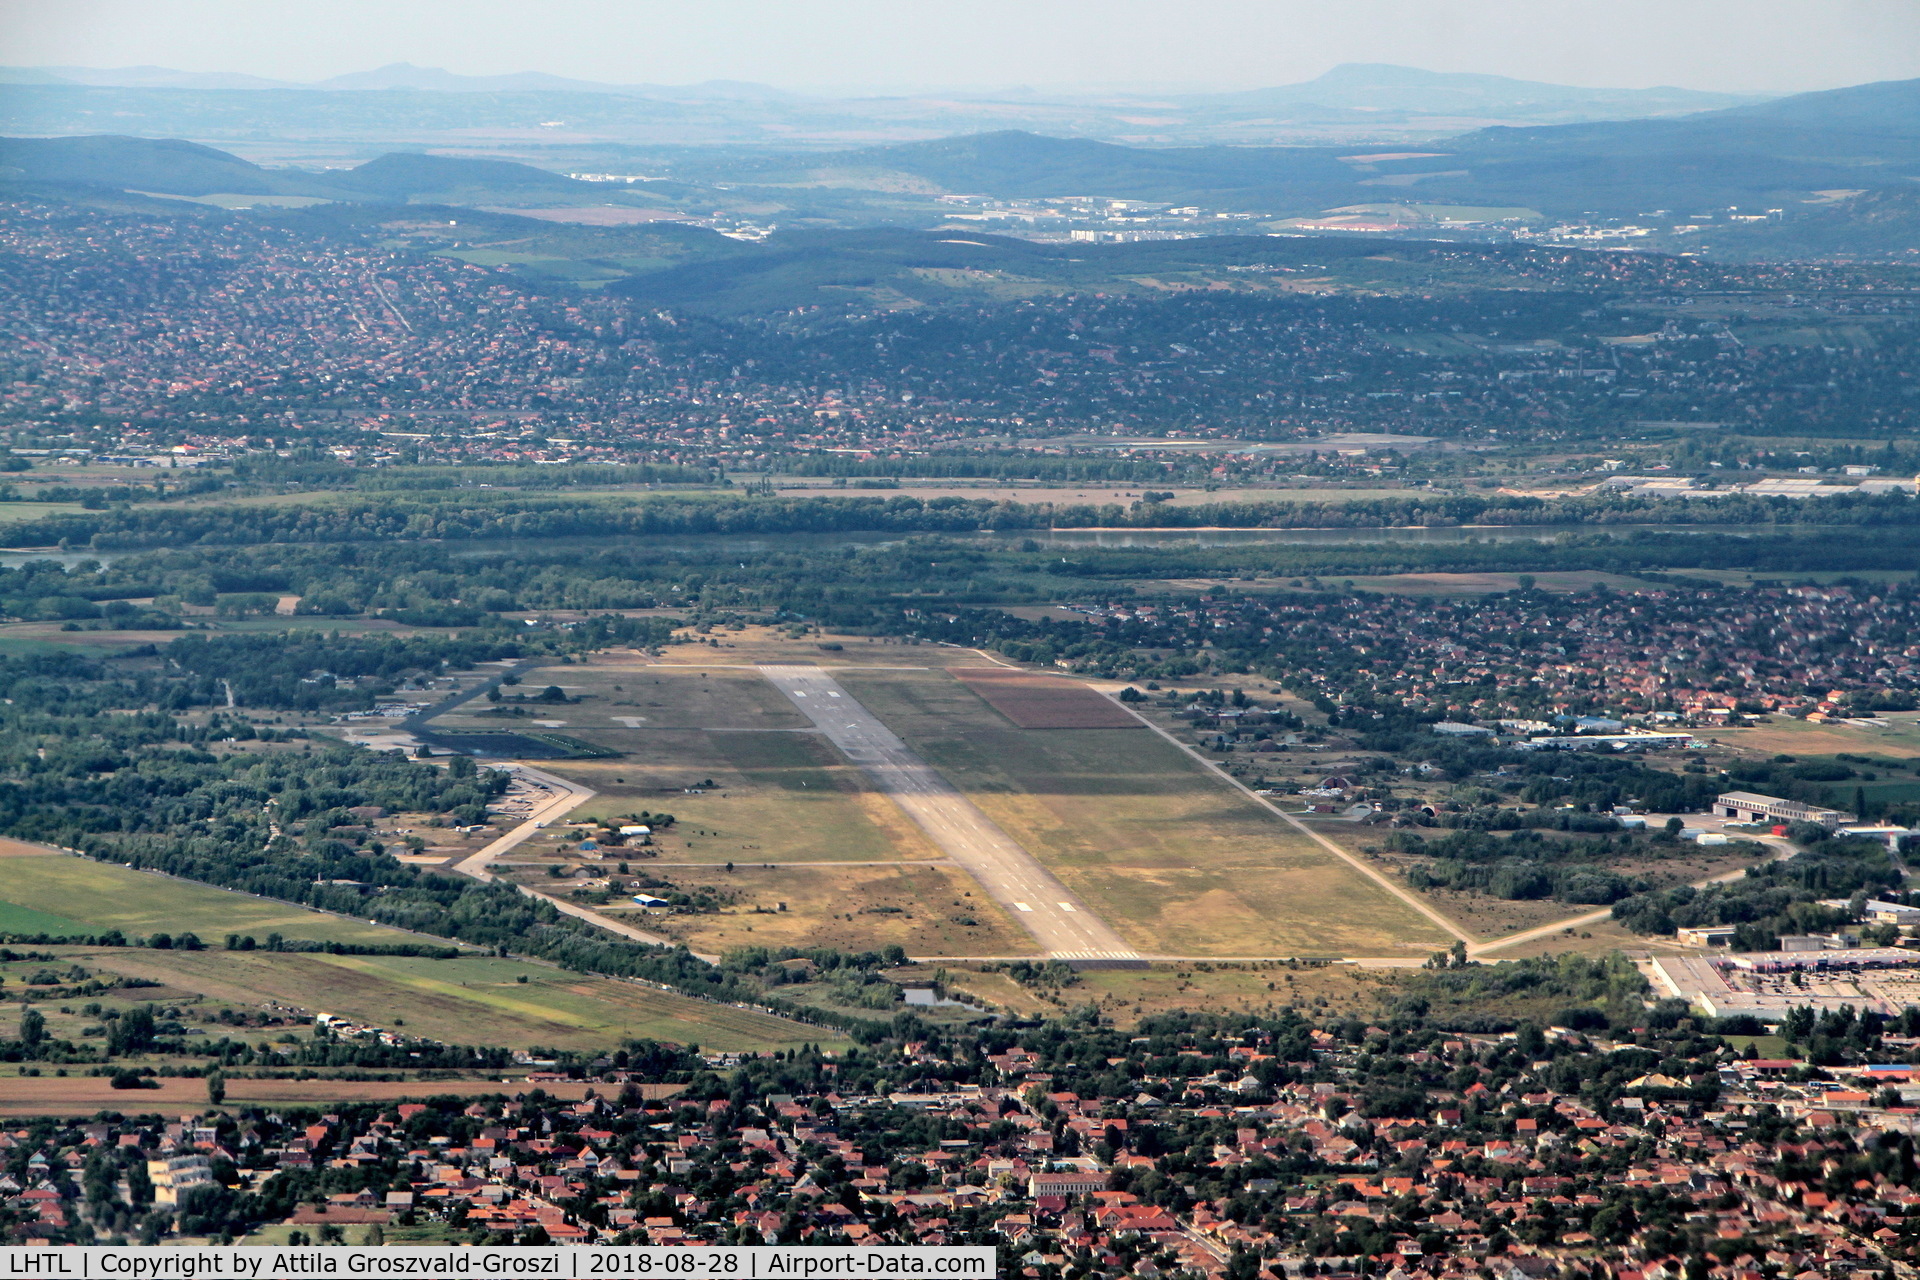 Tököl Airport, Tököl Hungary (LHTL) - Tököl Airport, Hungary